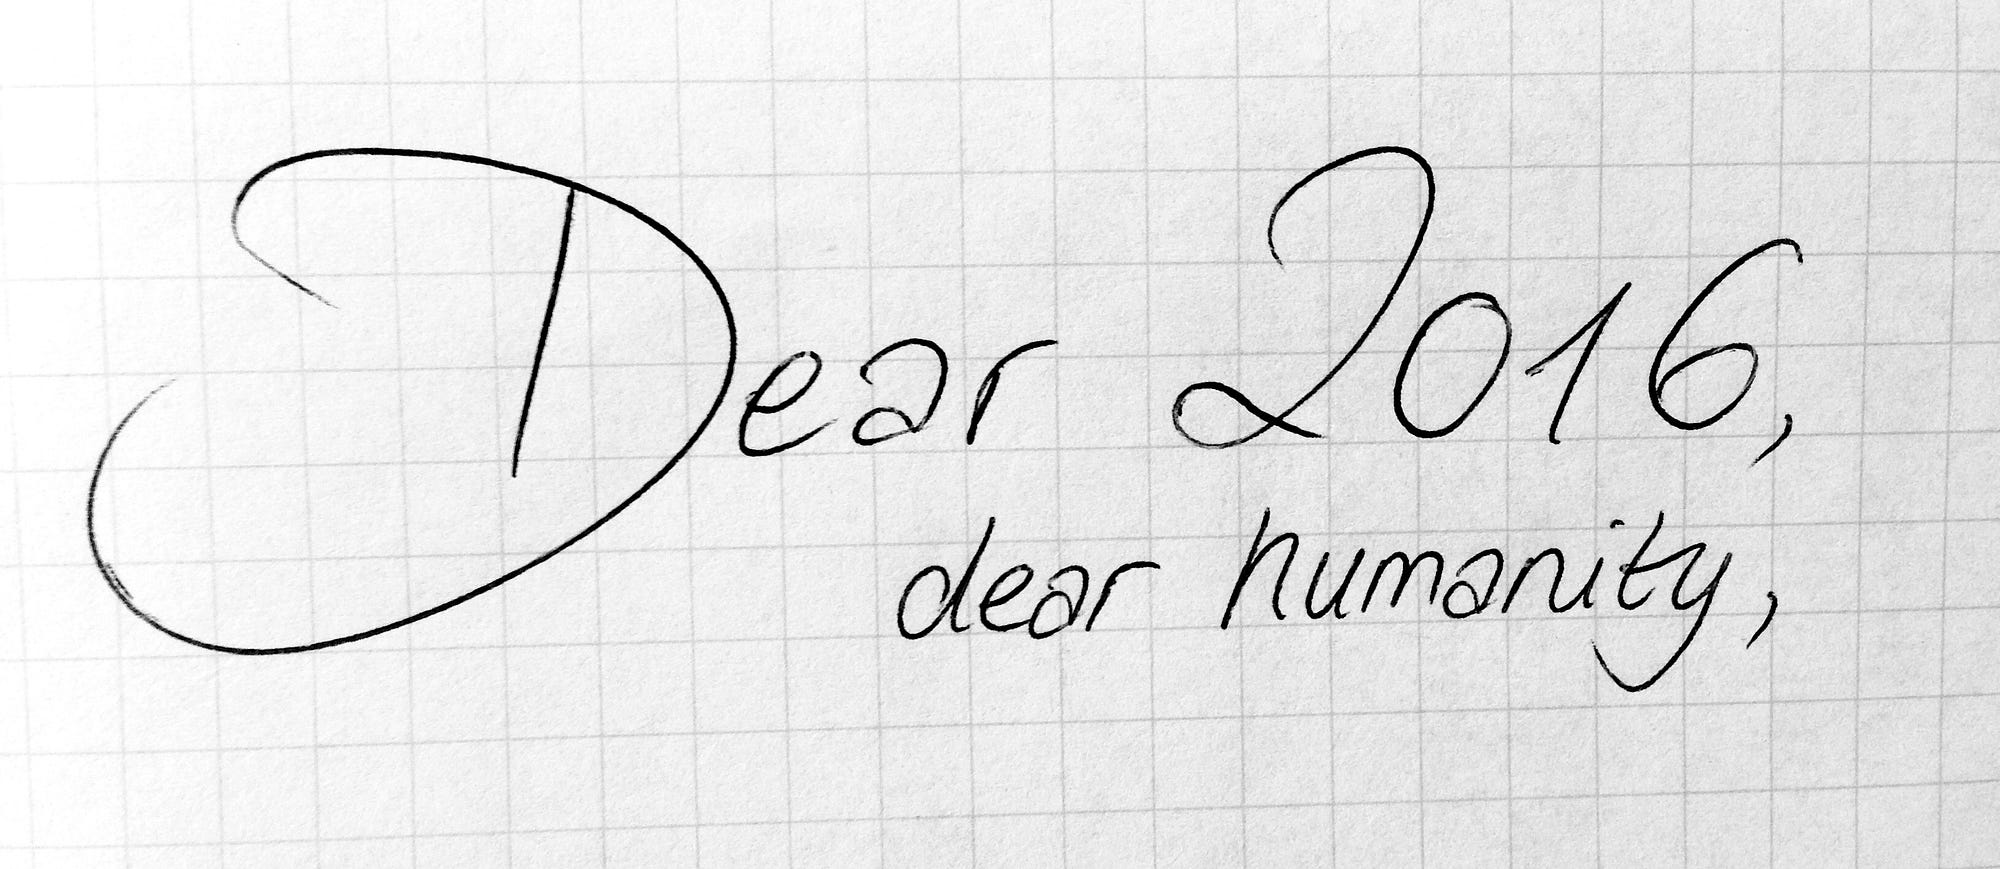 Dear 2016, dear humanity,